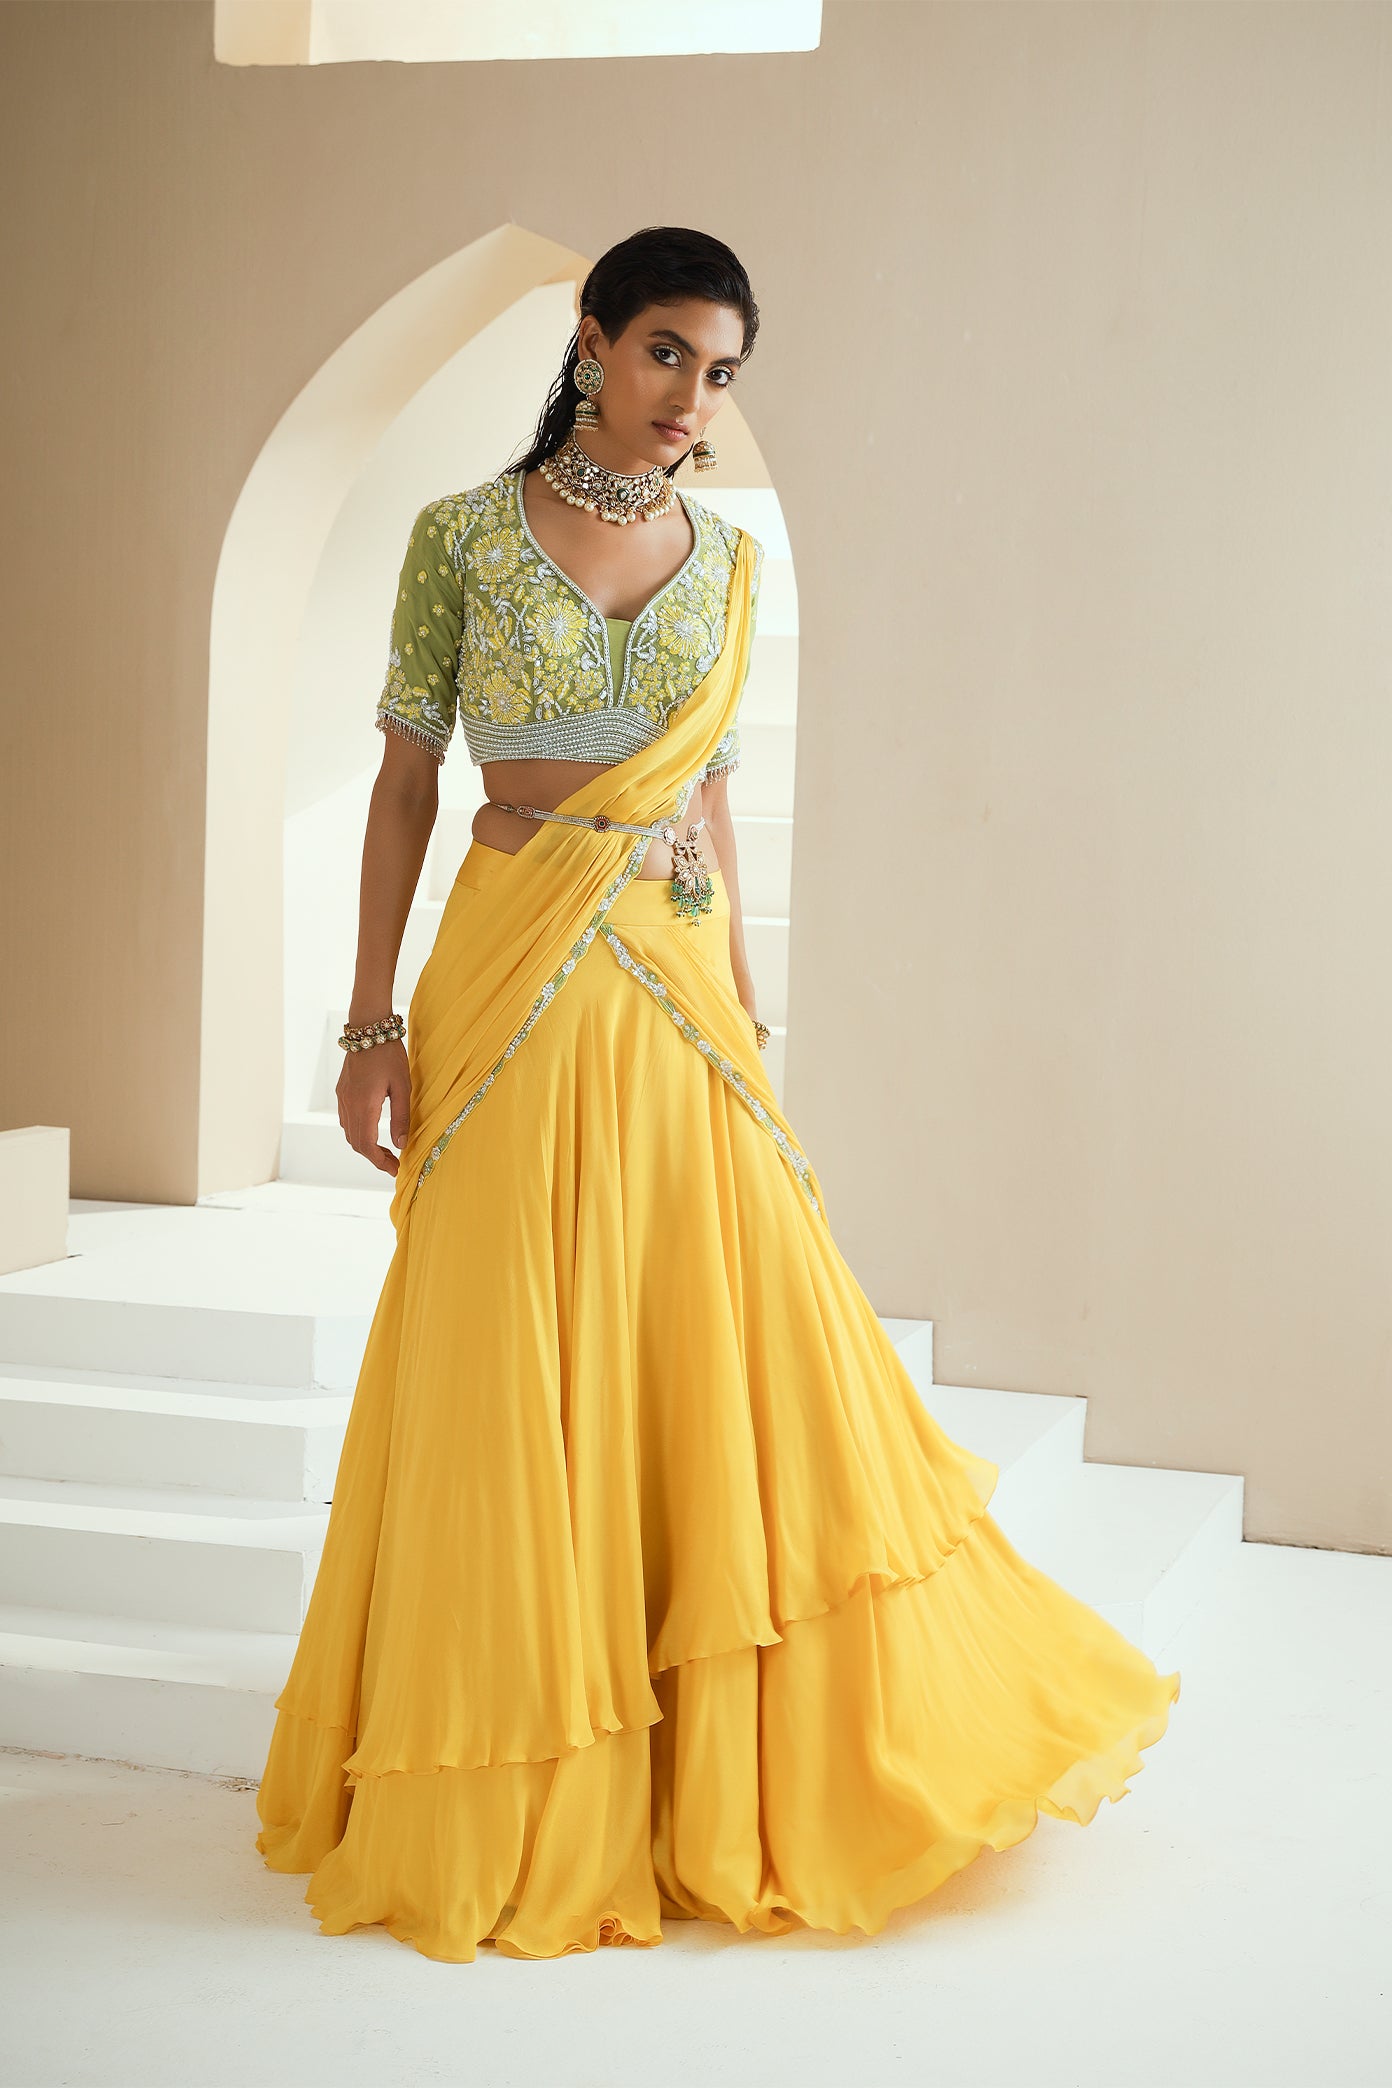 Latest yellow color mirror lehanga choli design for great looks – Joshindia